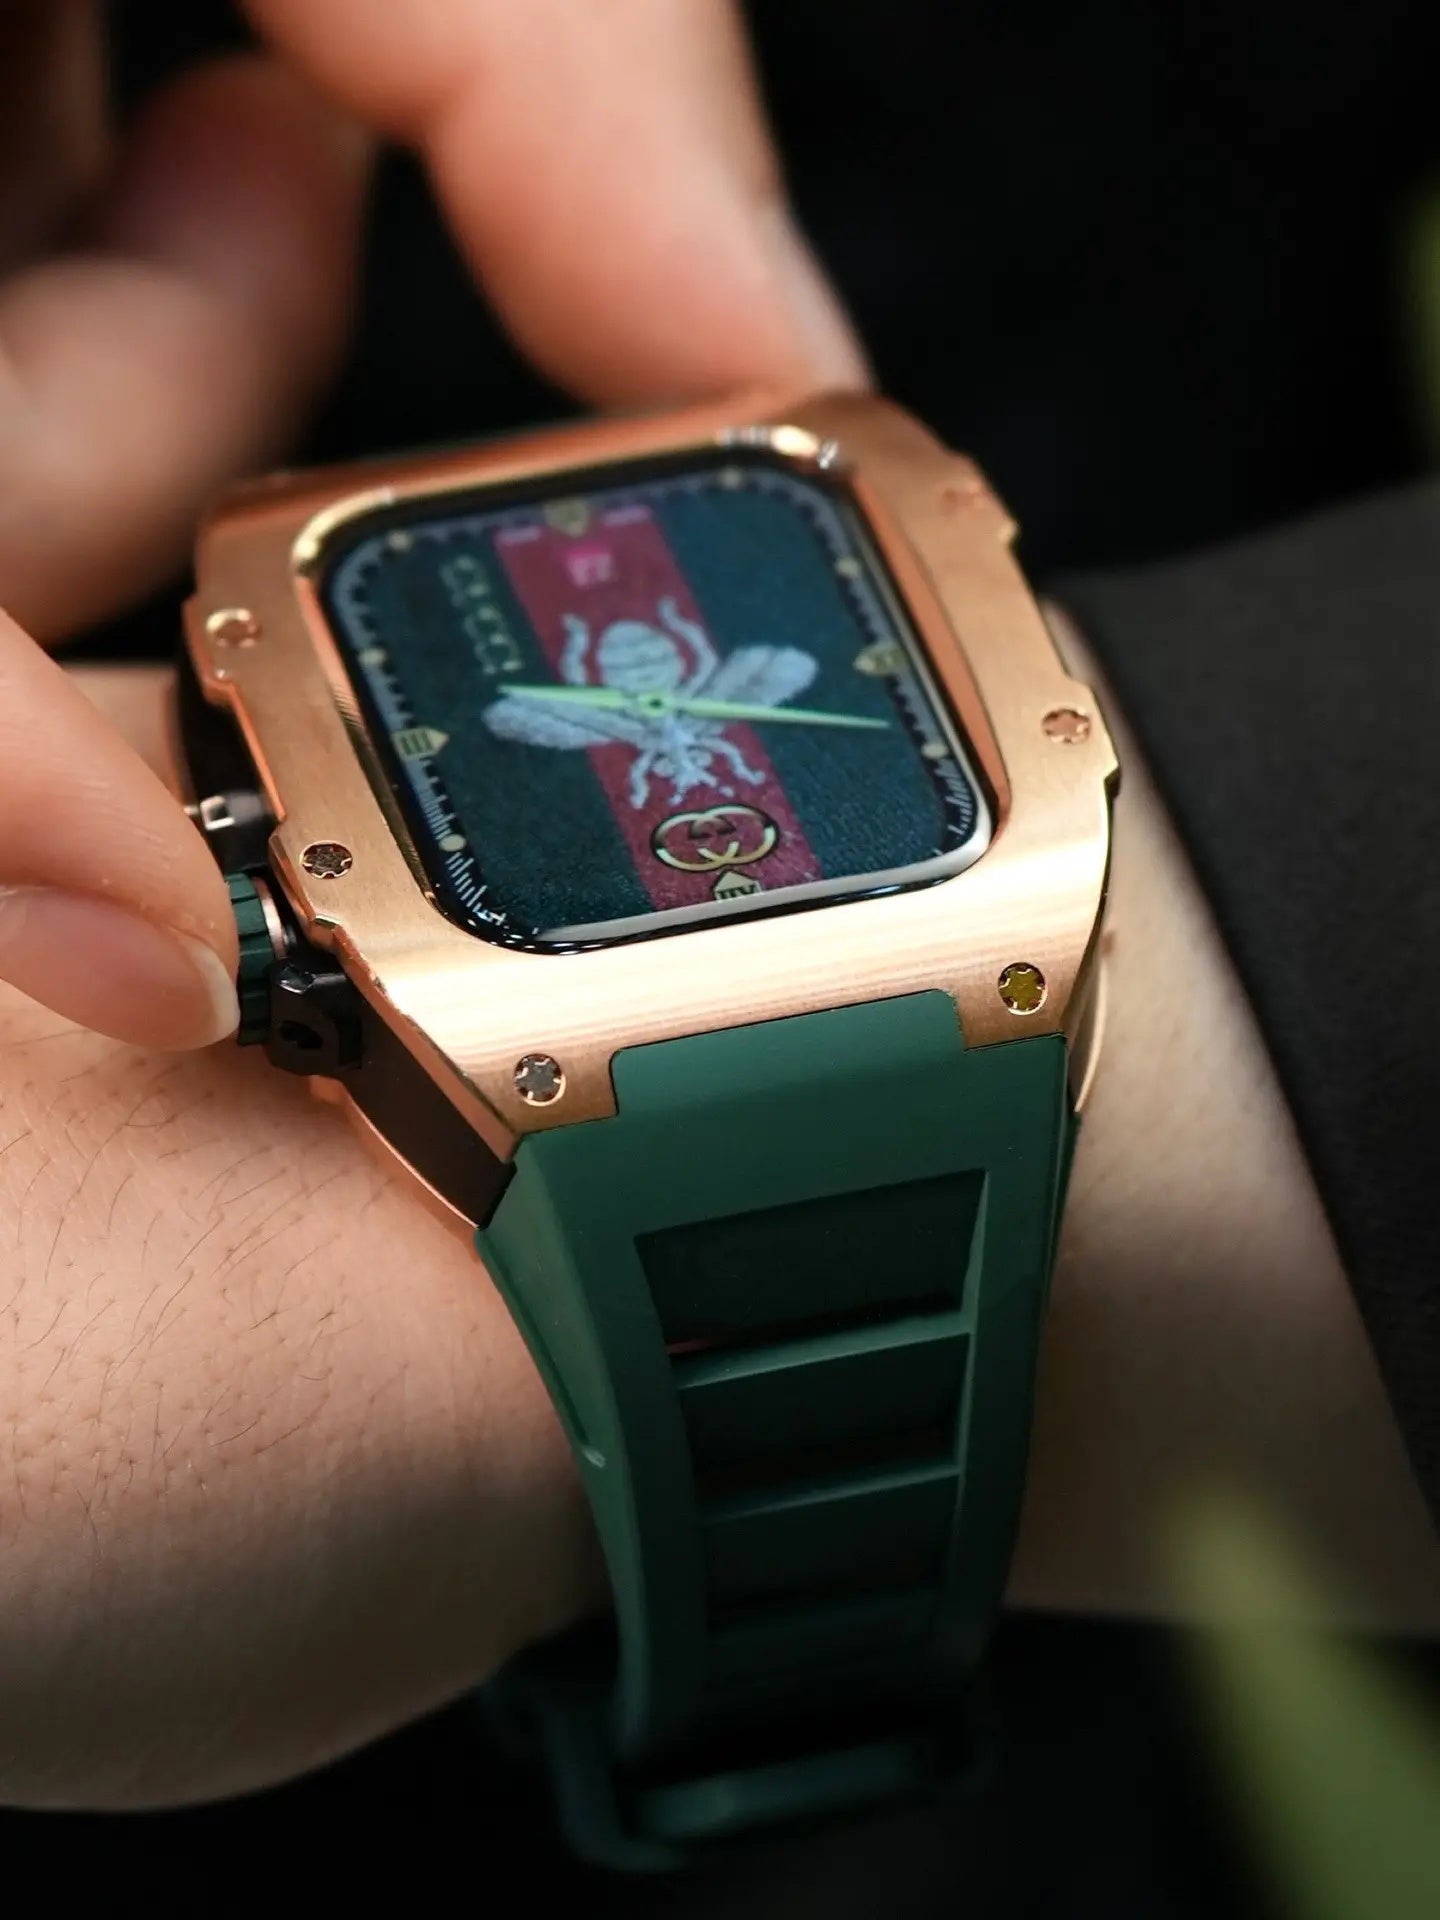 Kewusuma Titan Series - Crepe Titan Titanium Apple Watch Case worn by a man who is pressing the Apple Watch Watch Crown